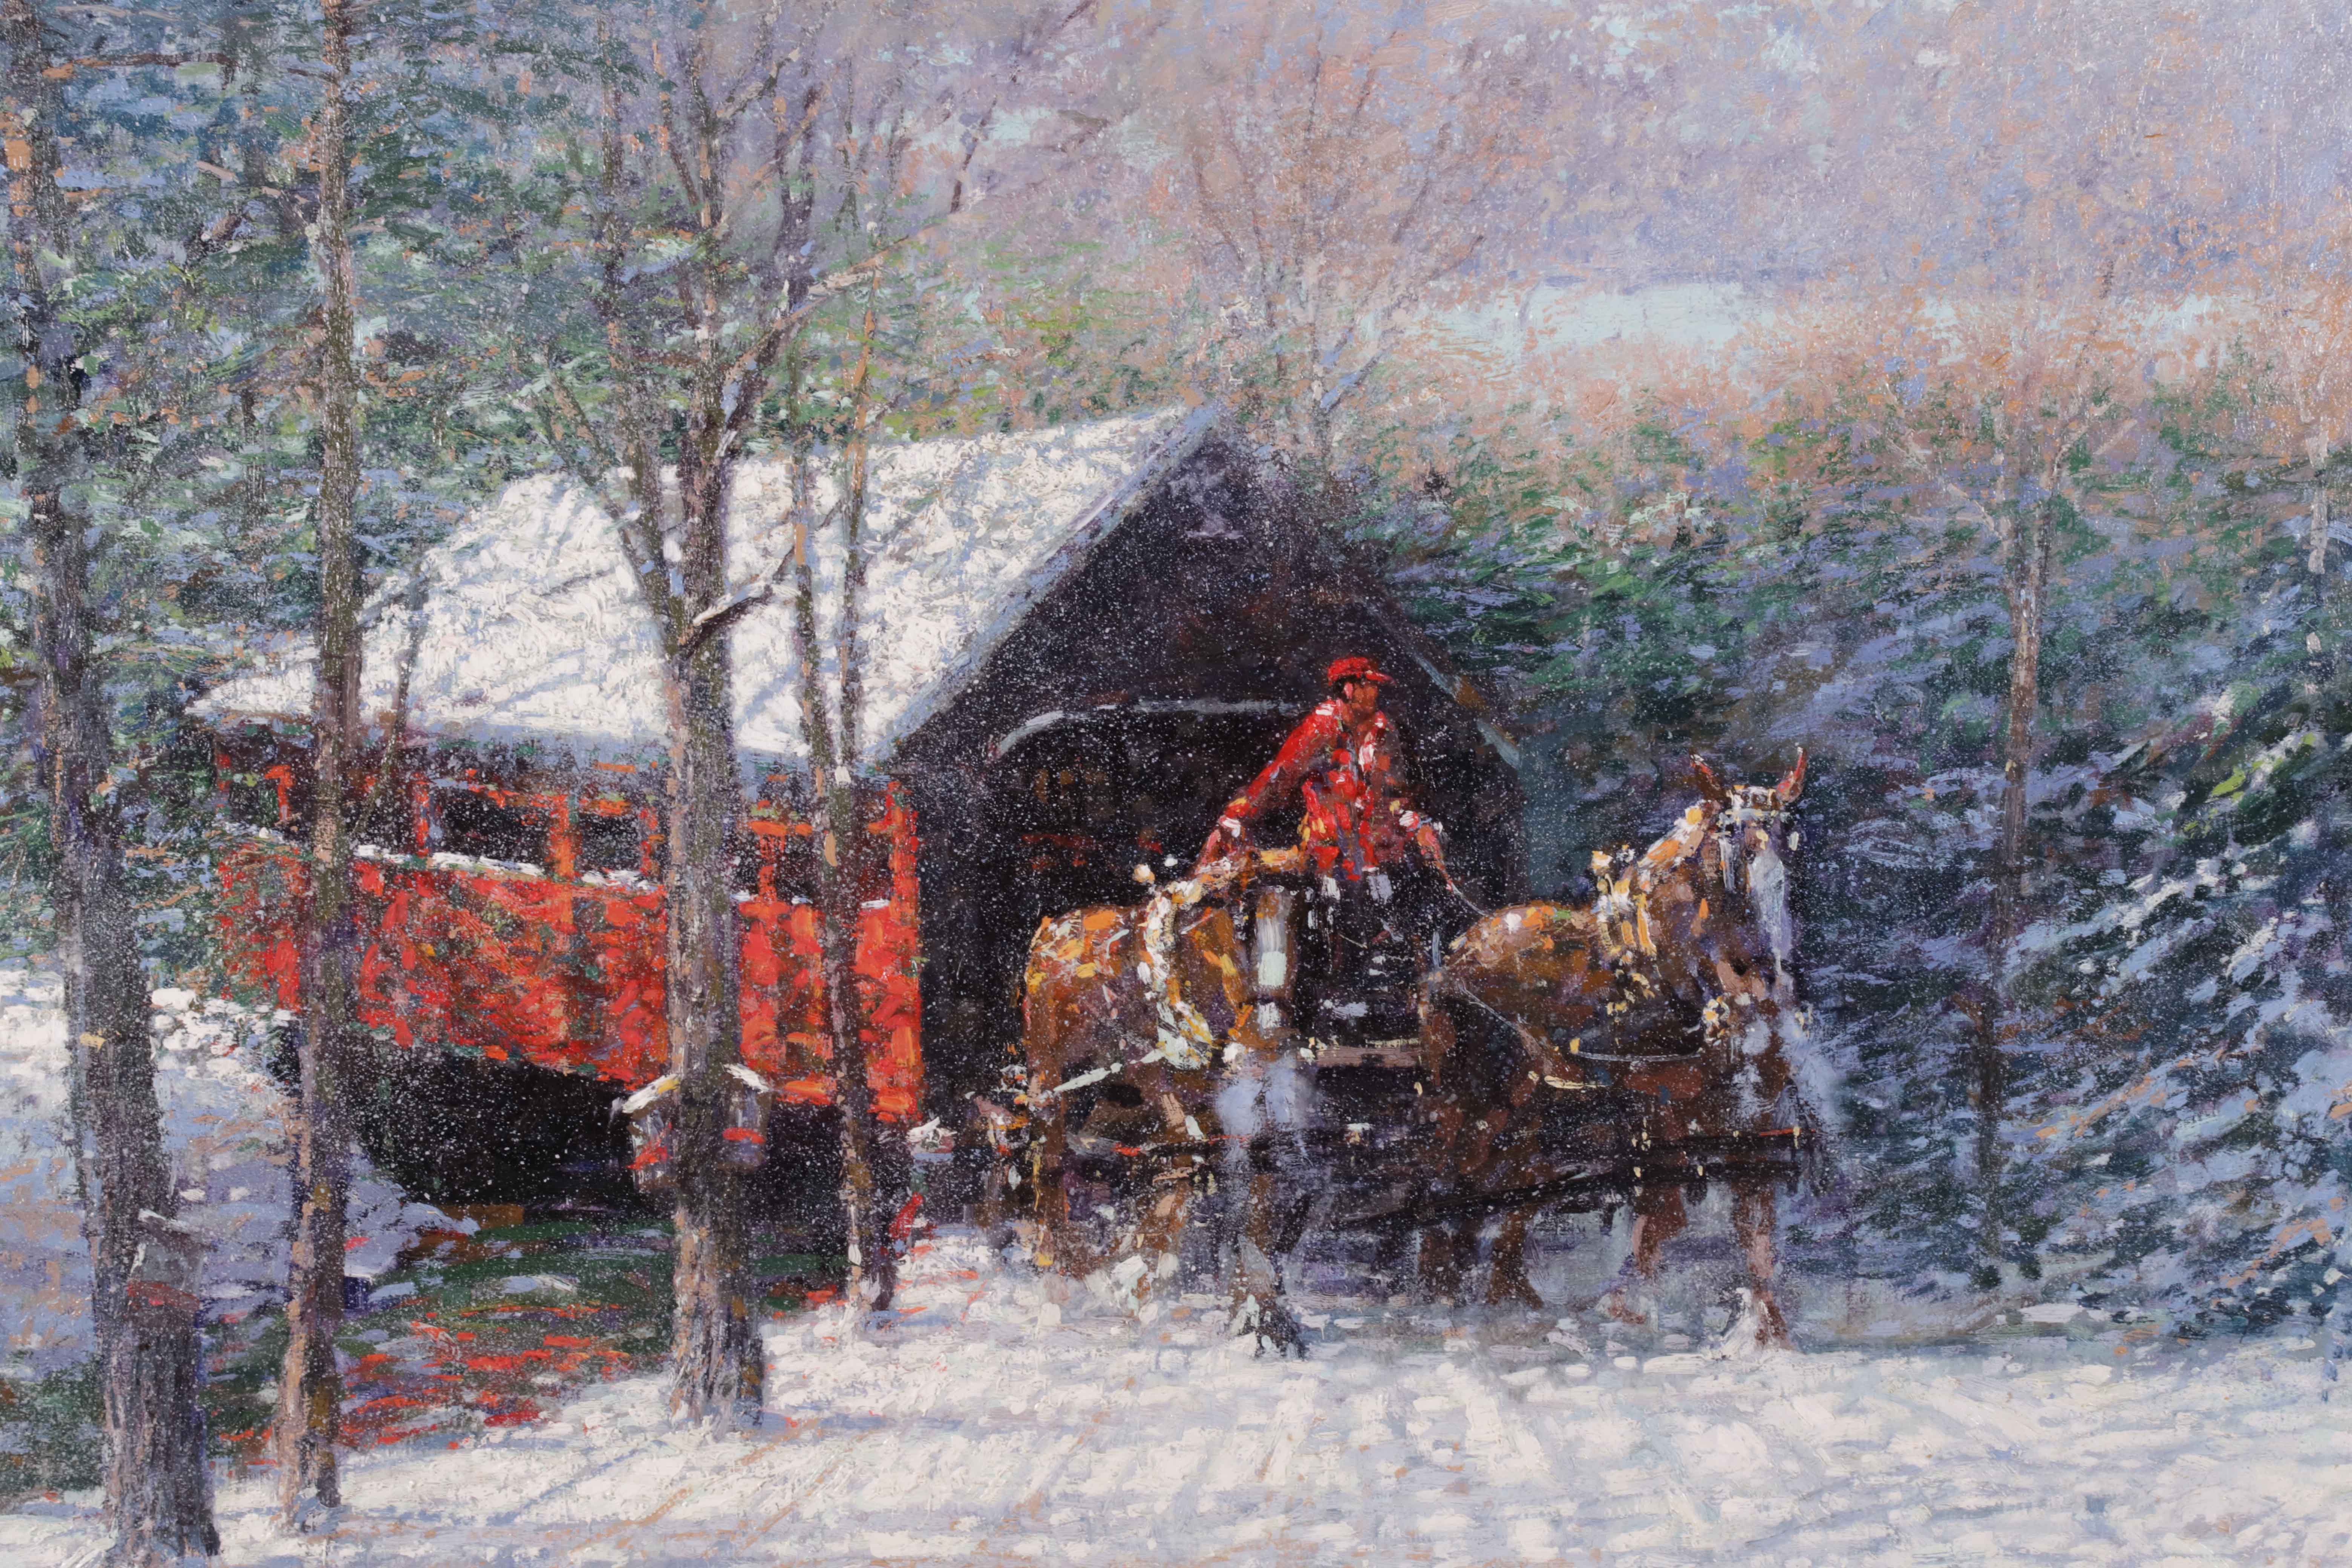 John Charles Terelak Oil on Canvas “Winter Chores”, circa 1986